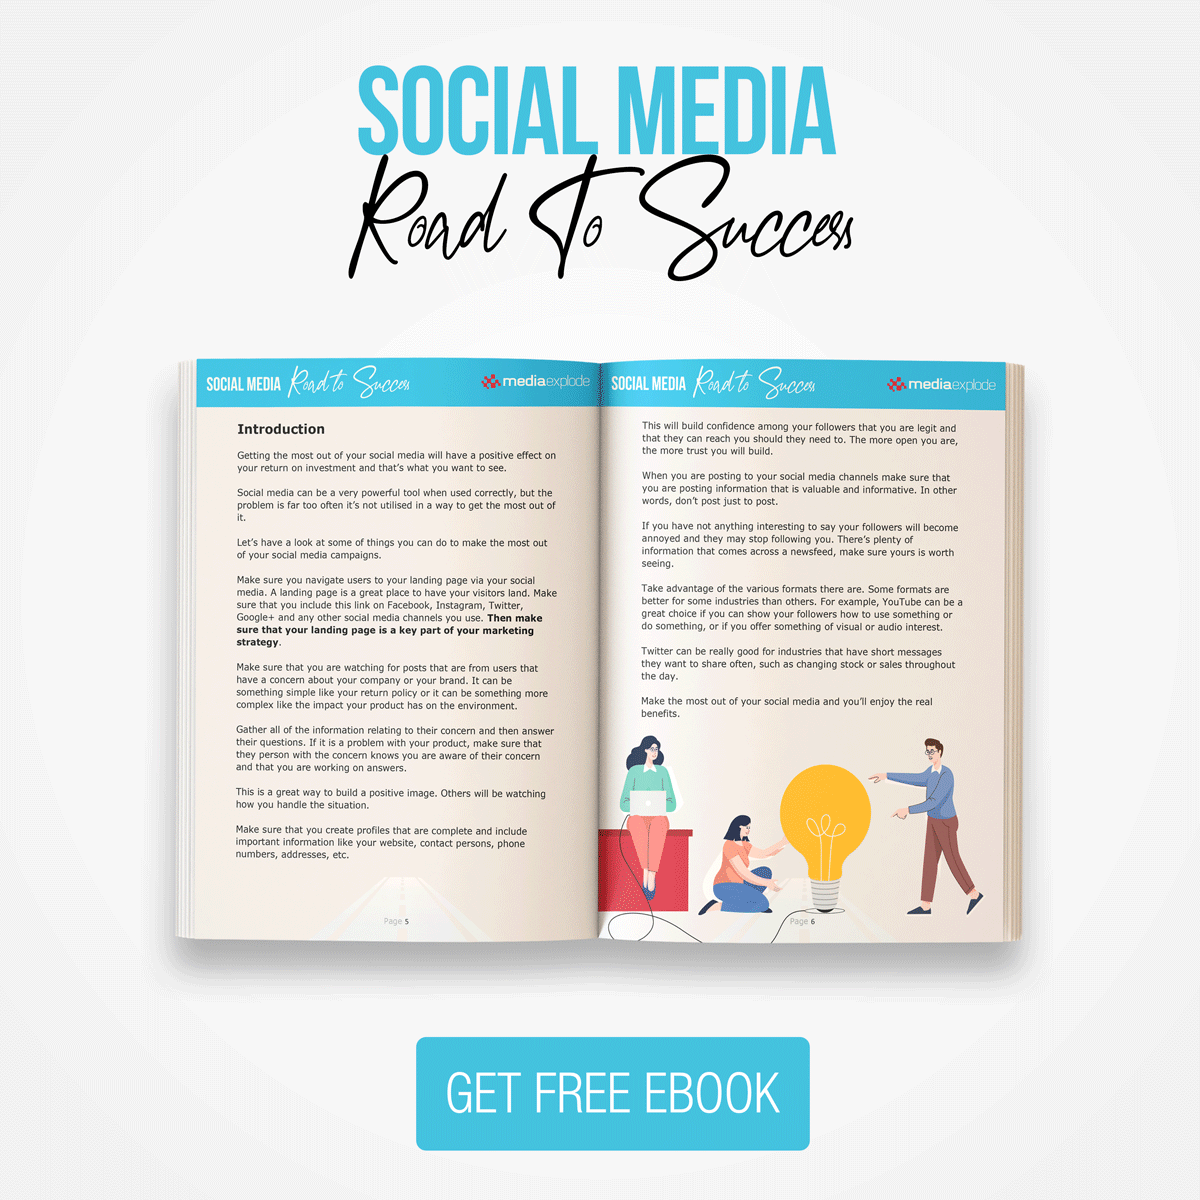 Social Media Road To Success Download Free eBook